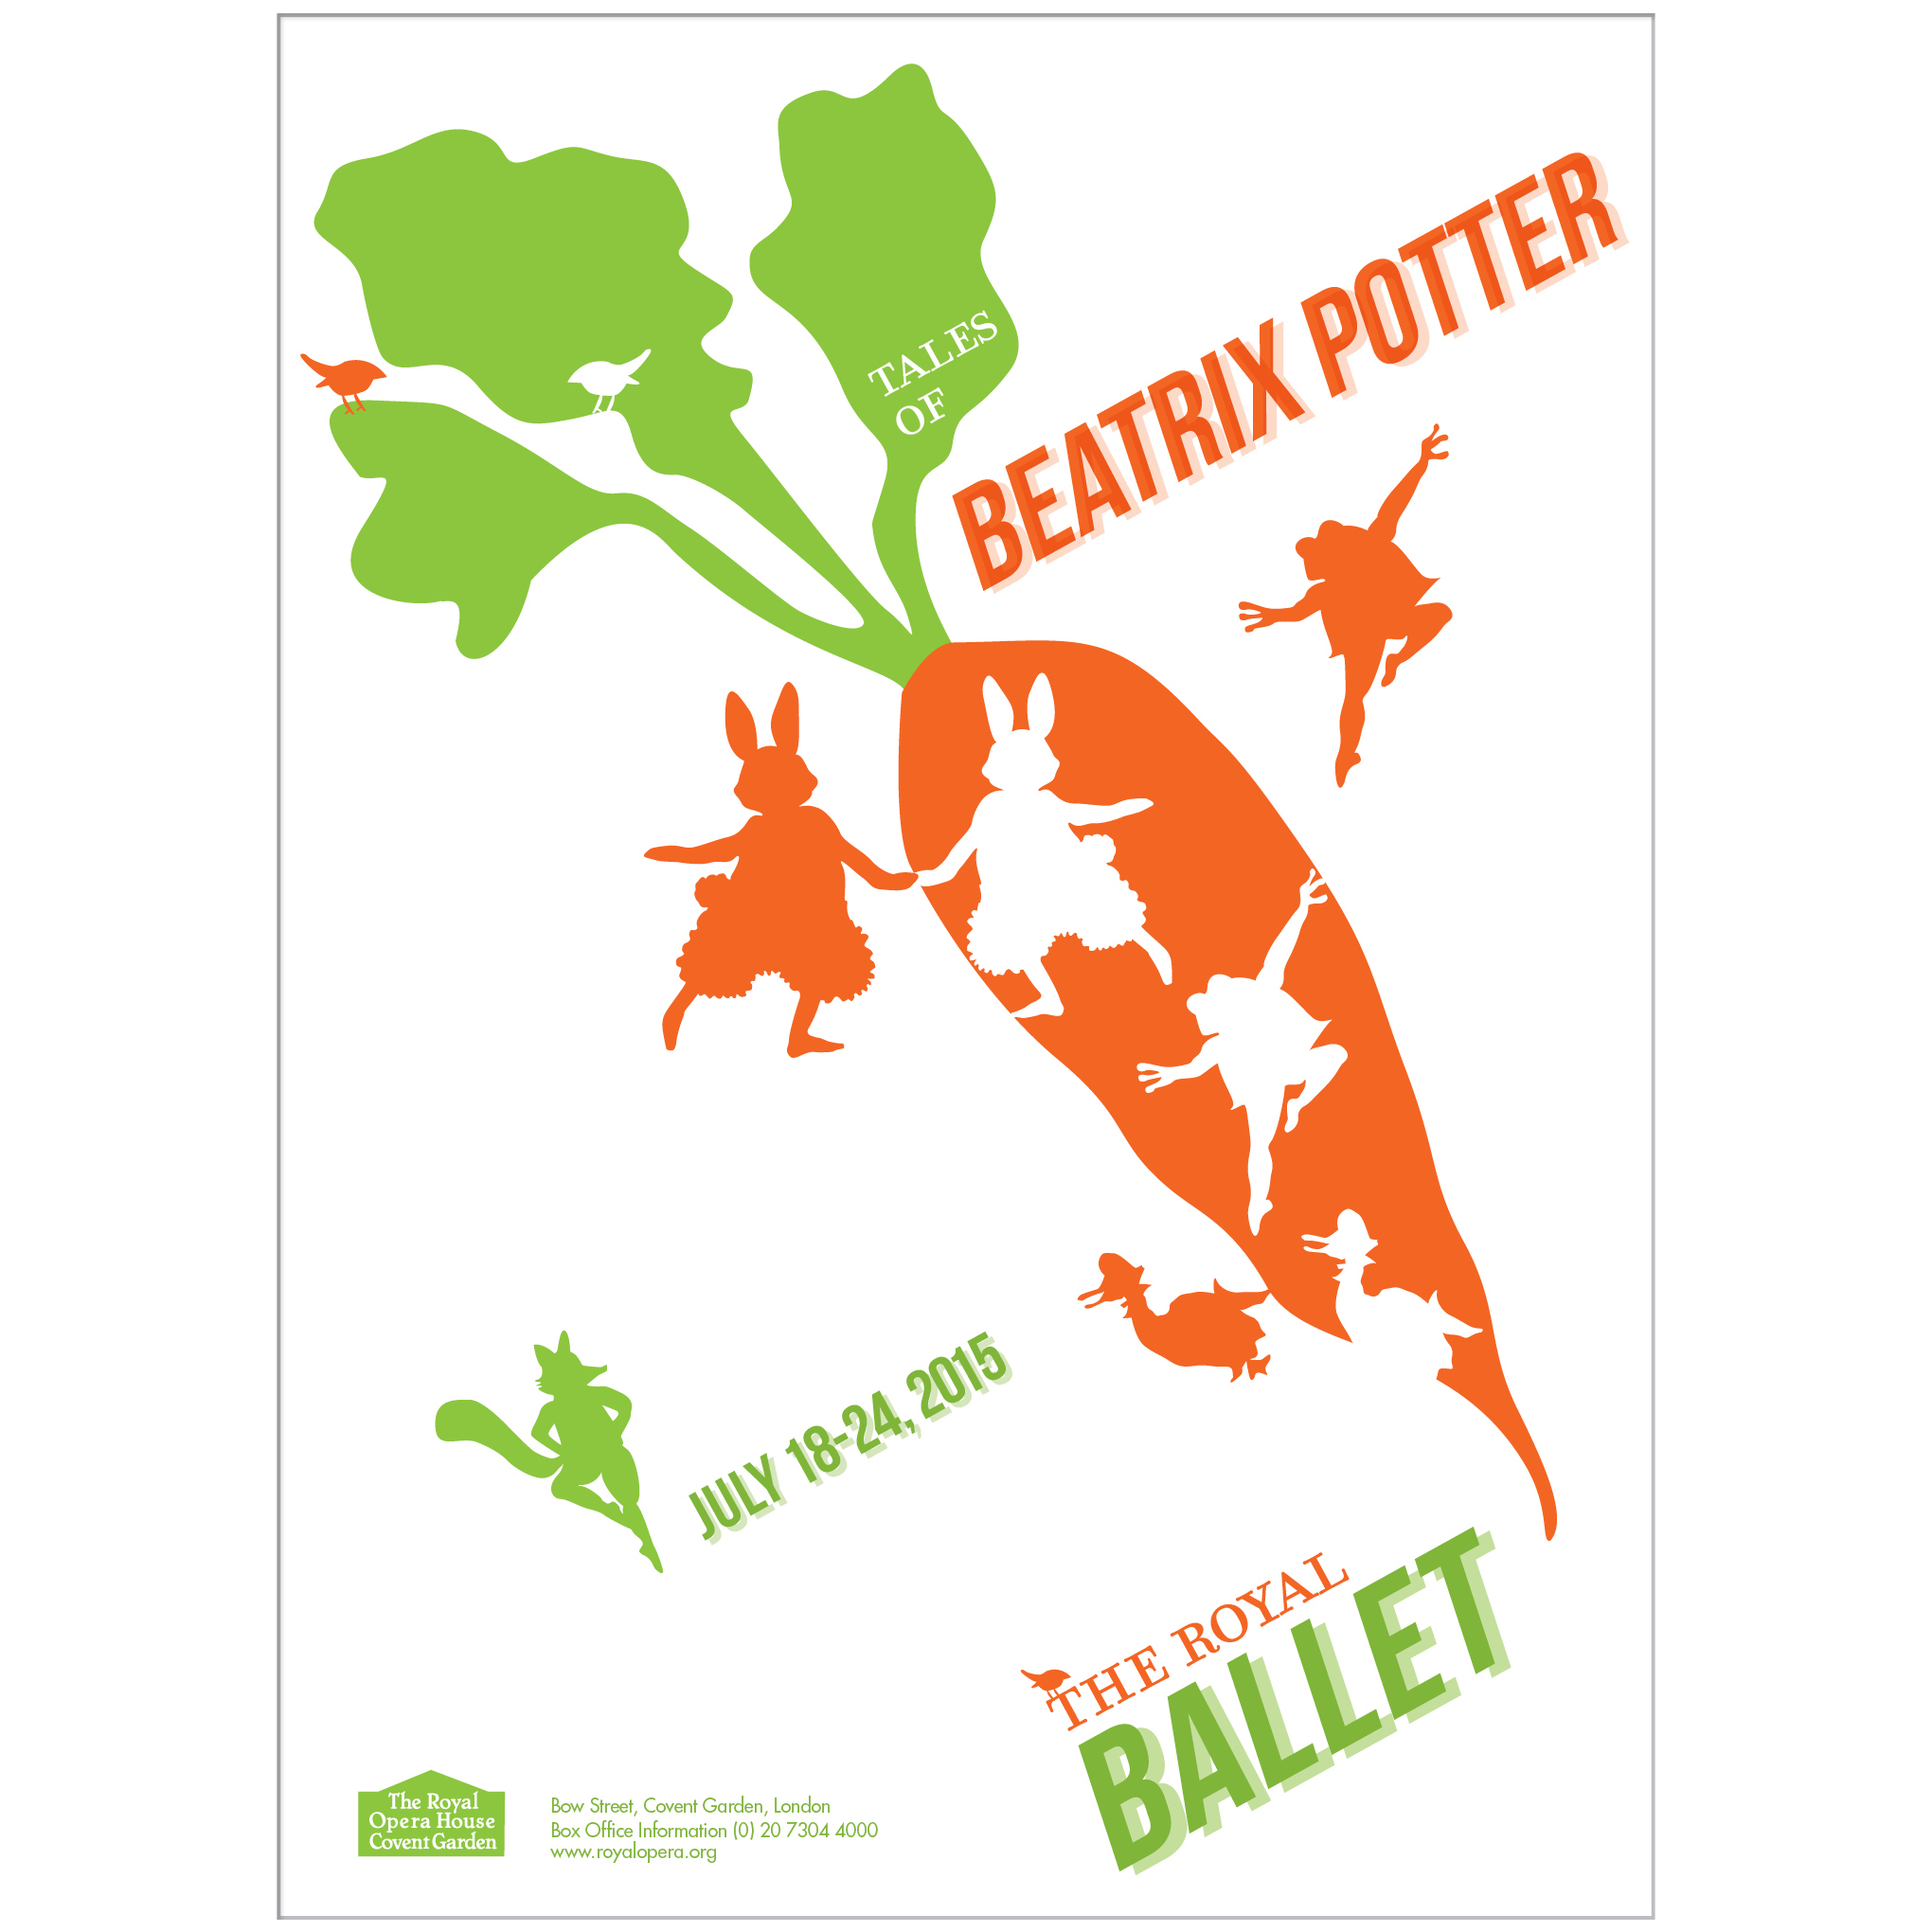 Ballet poster (Tales of Beatrix Potter)